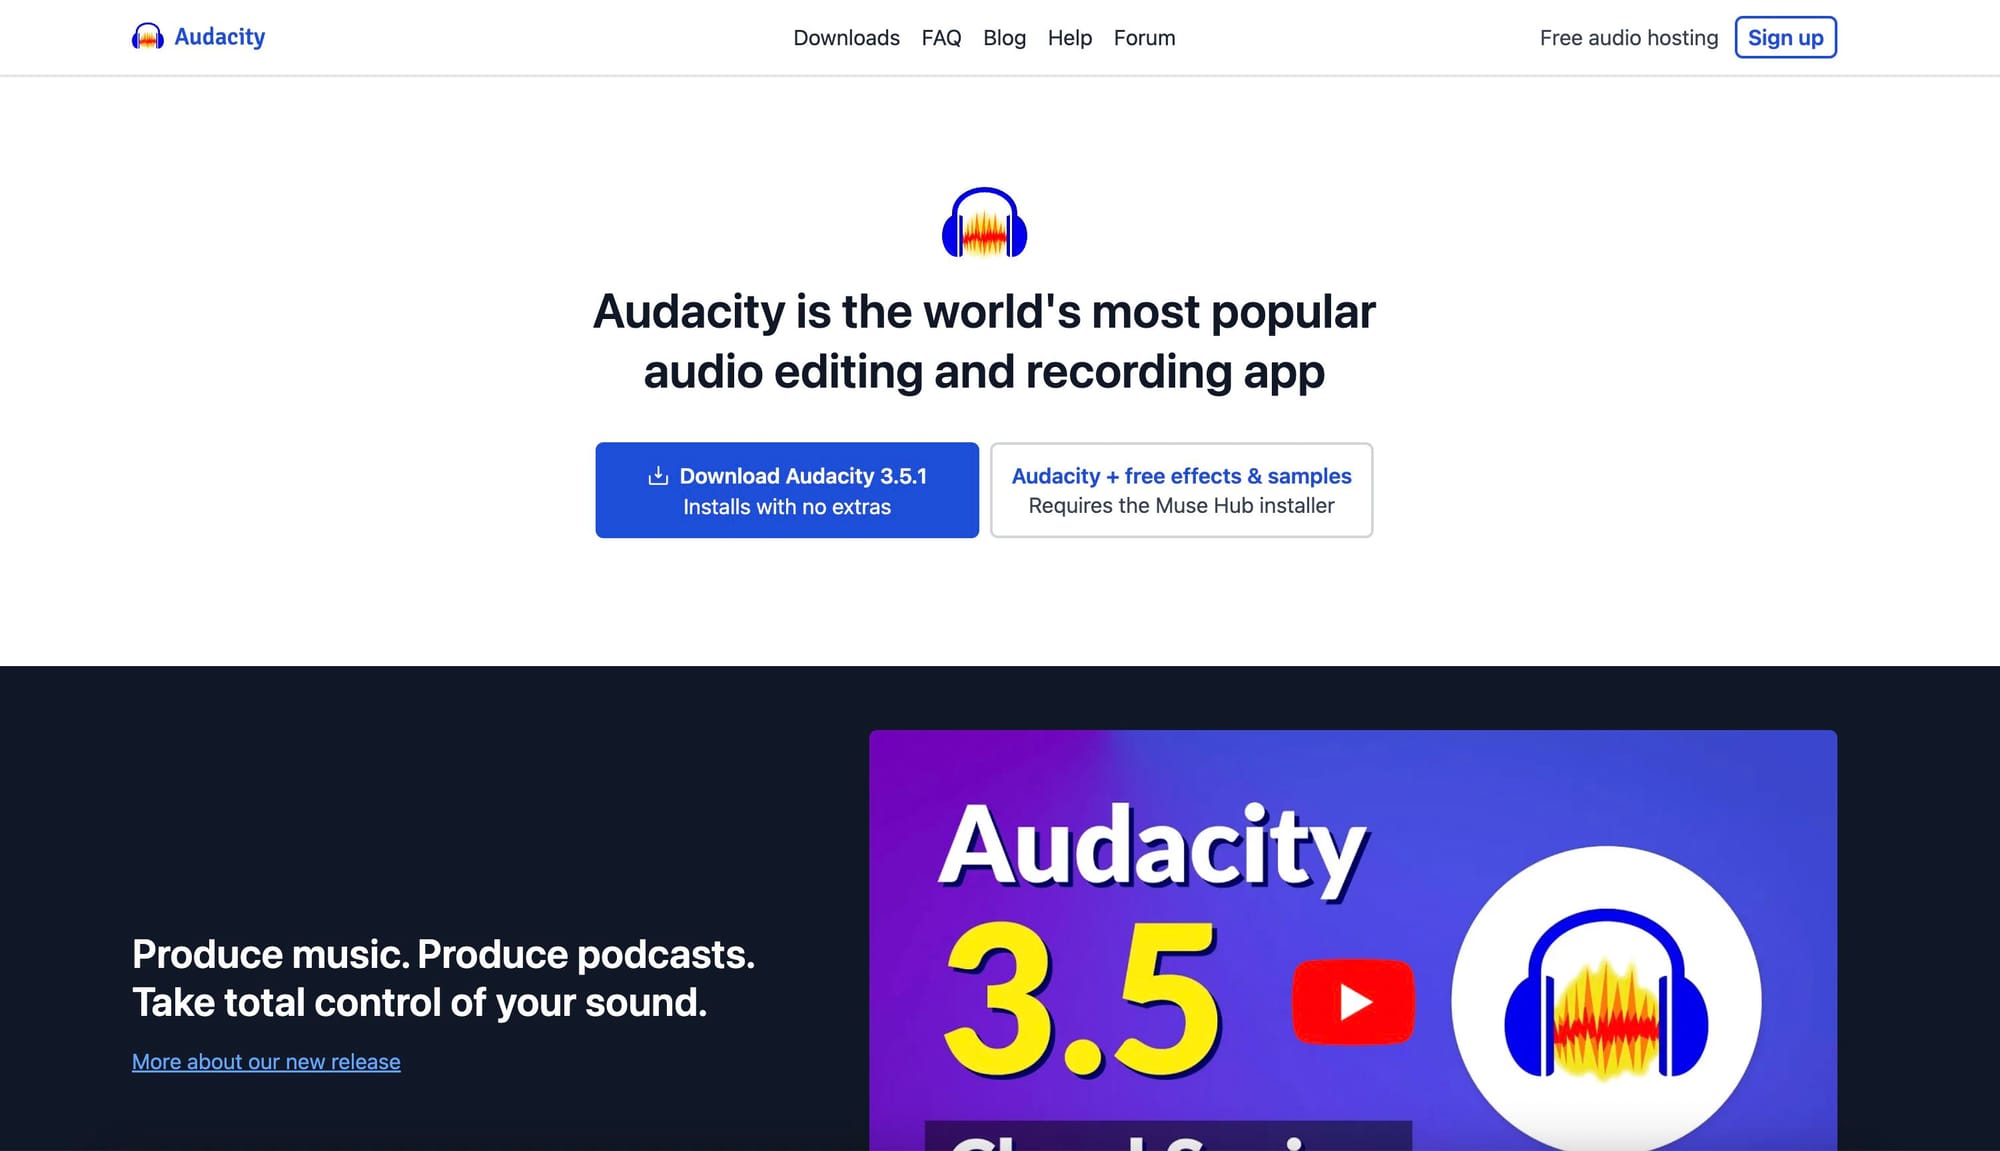 Audacity's homepage